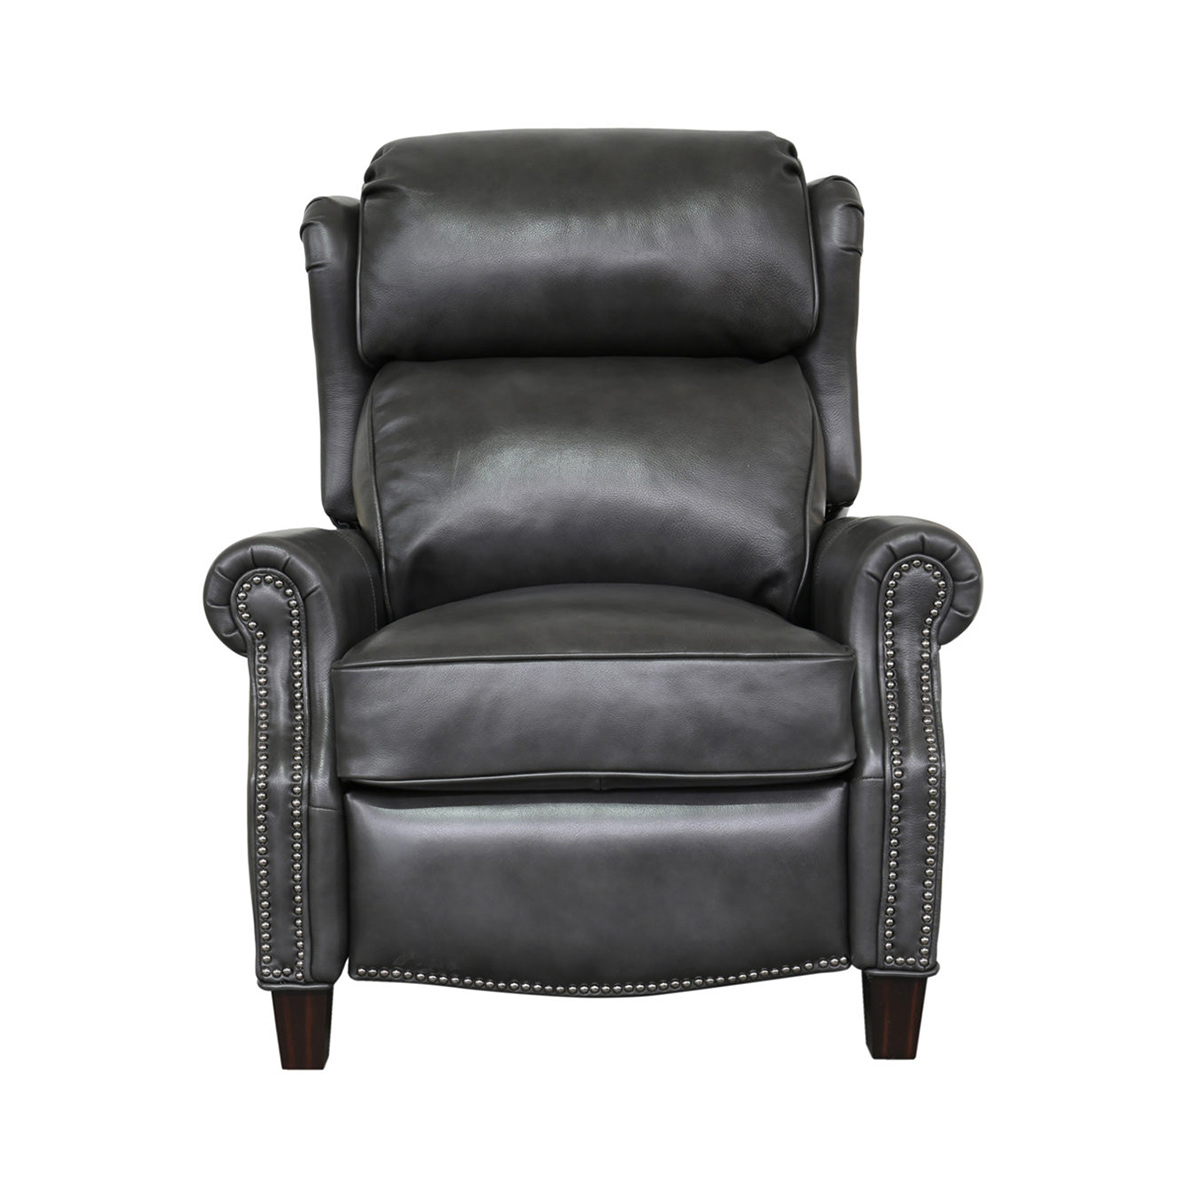 Barcalounger Meade Recliner Chair - Wrenn Gray/all leather